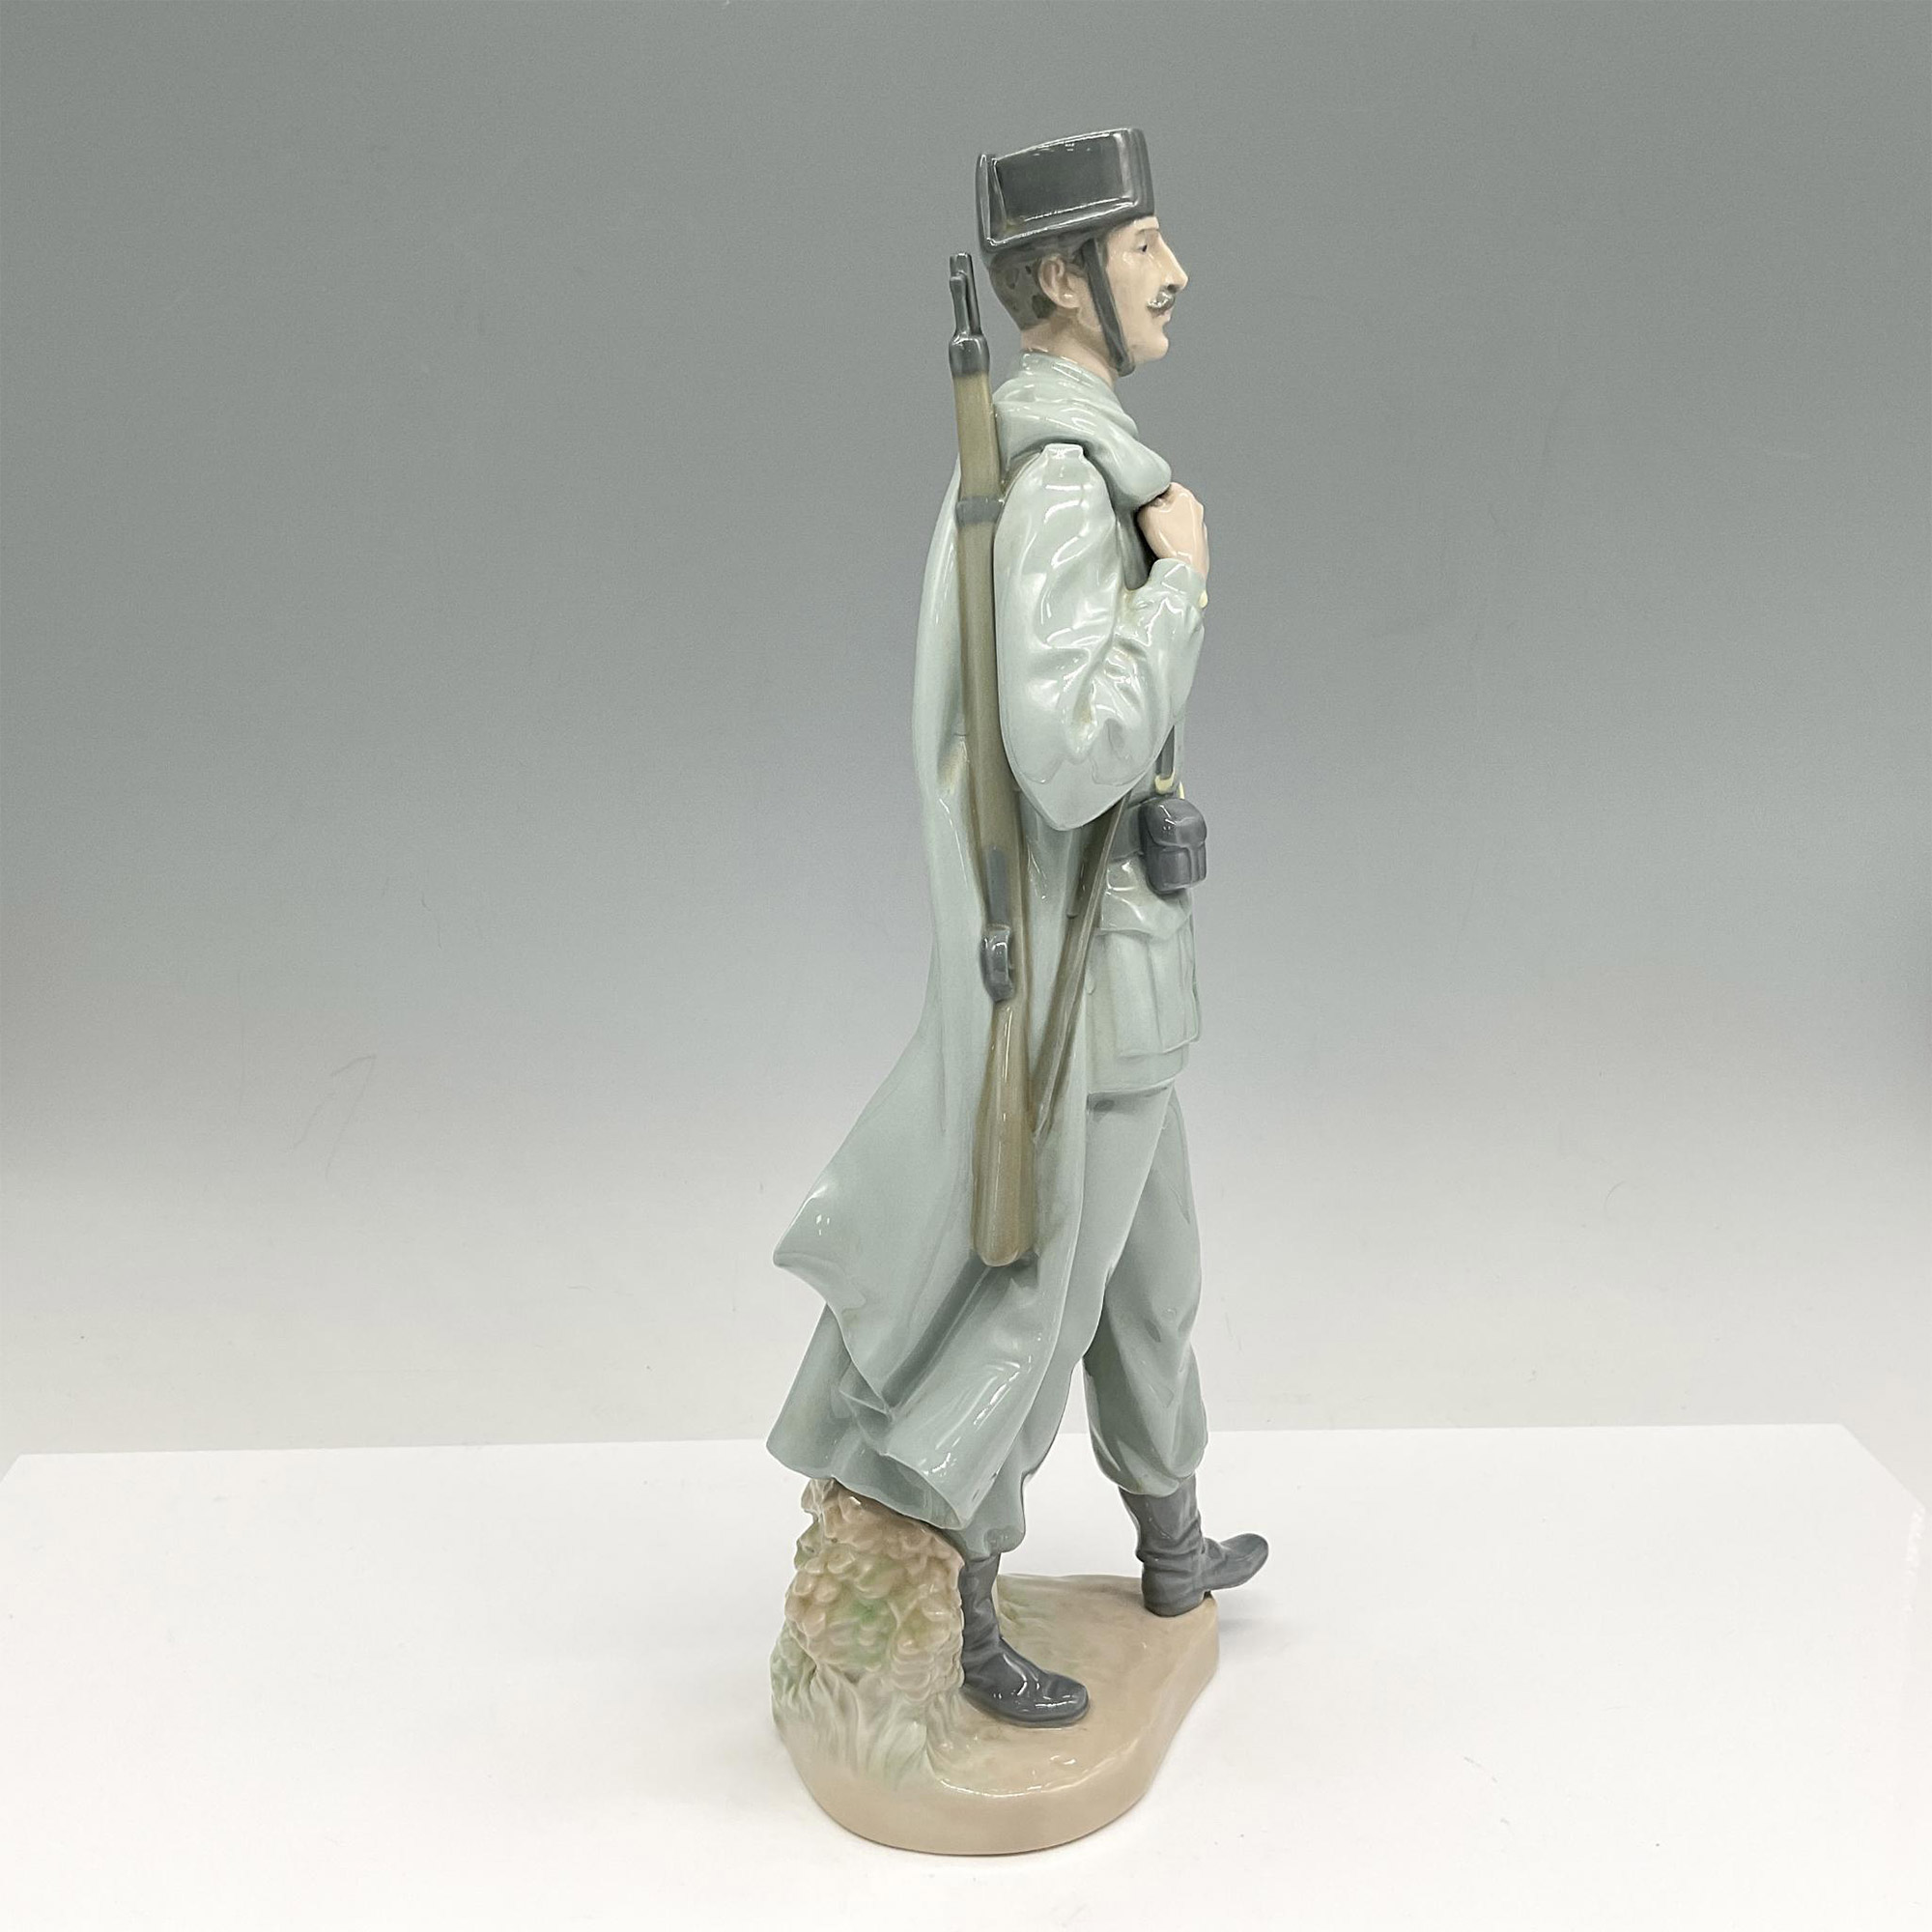 Spanish Policeman 1004889 - Lladro Porcelain Figurine - Image 2 of 4